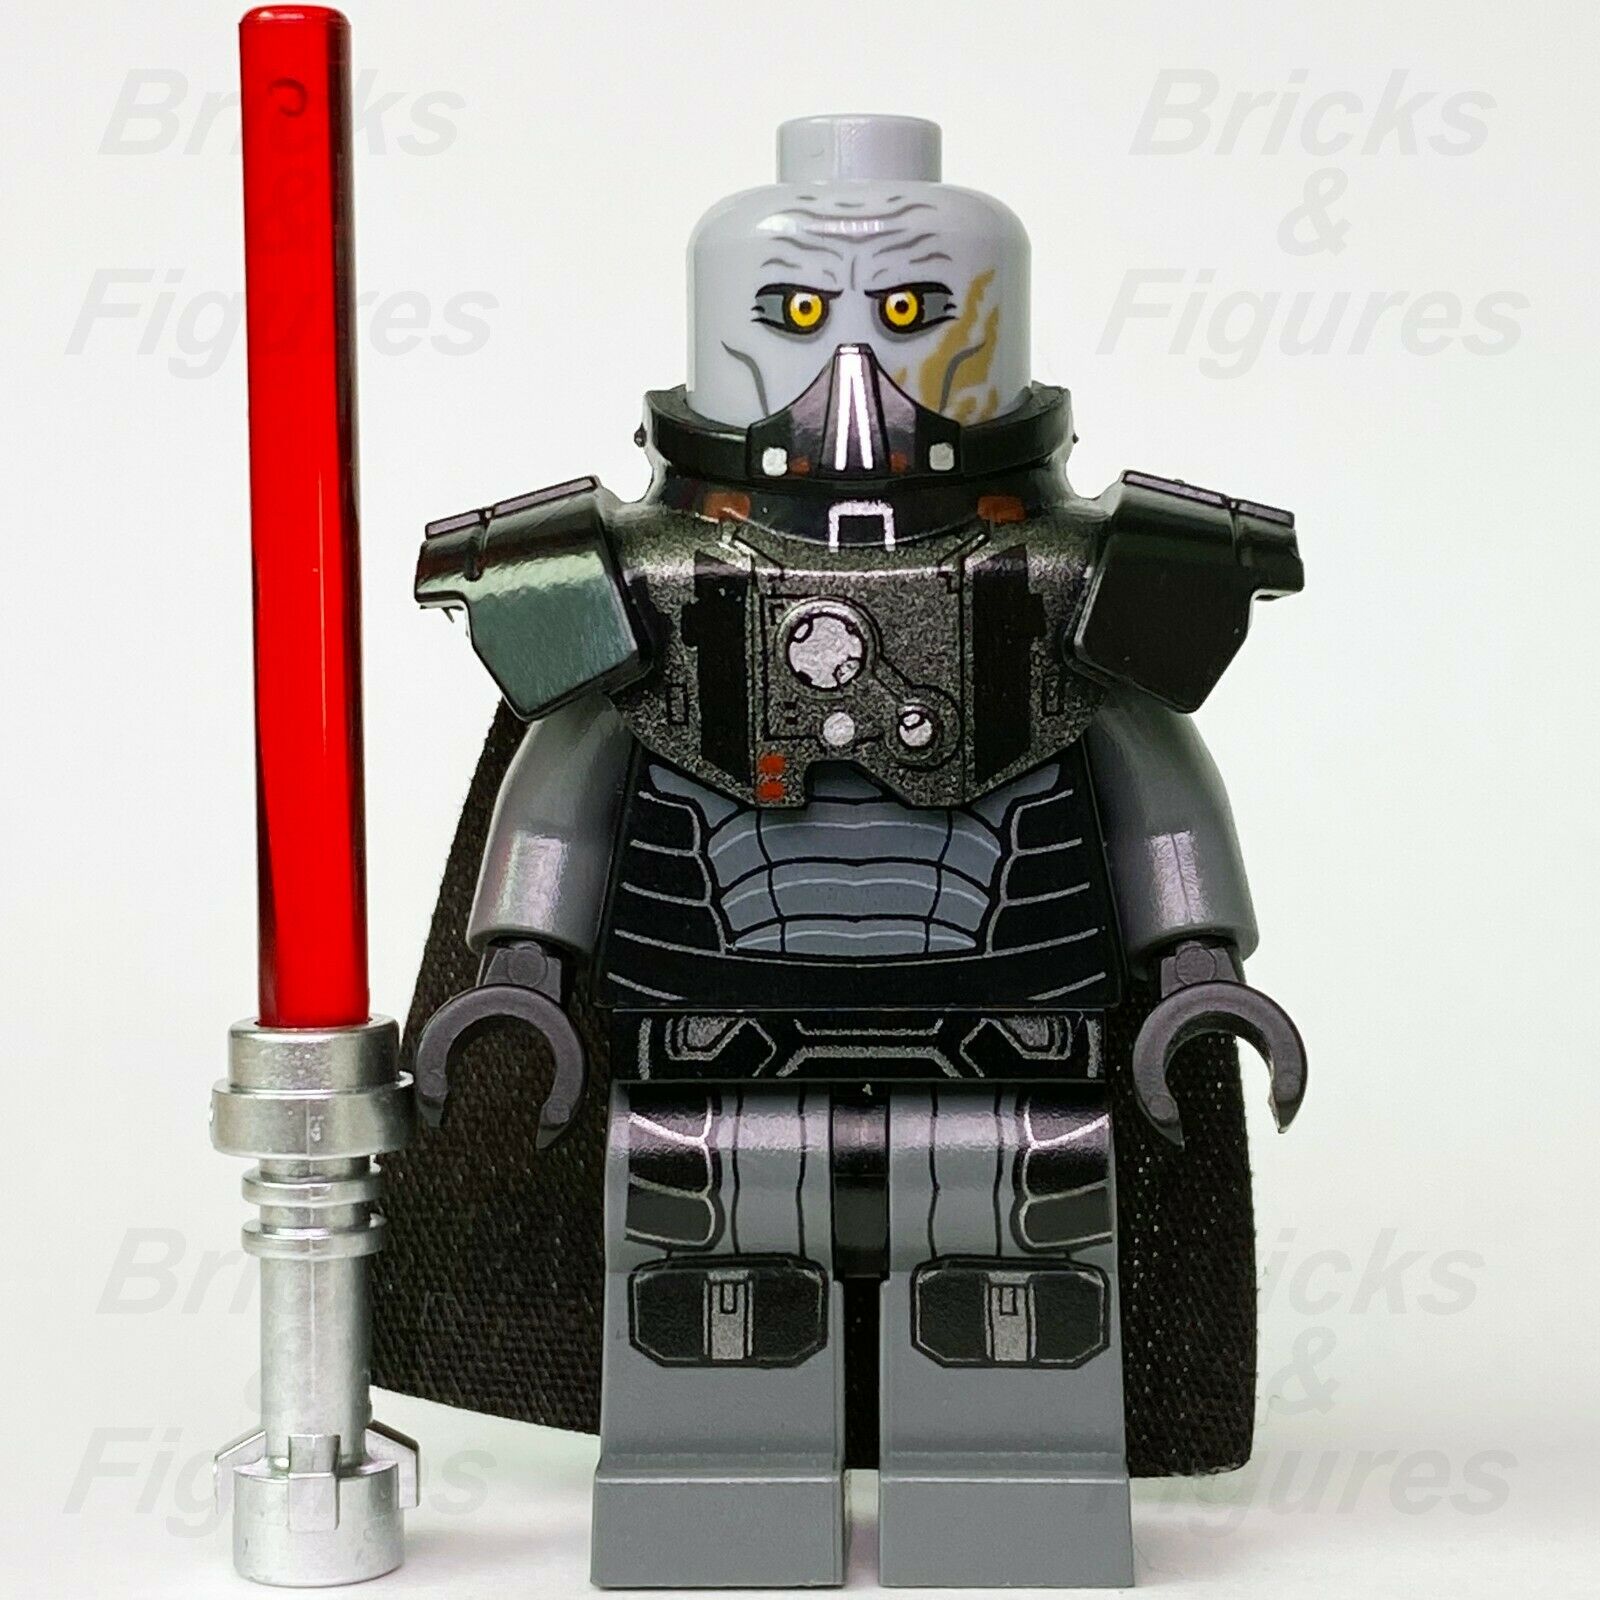 New Star Wars LEGO Darth Malgus Sith Lord The Old Republic Minifigure 9500 - Bricks & Figures